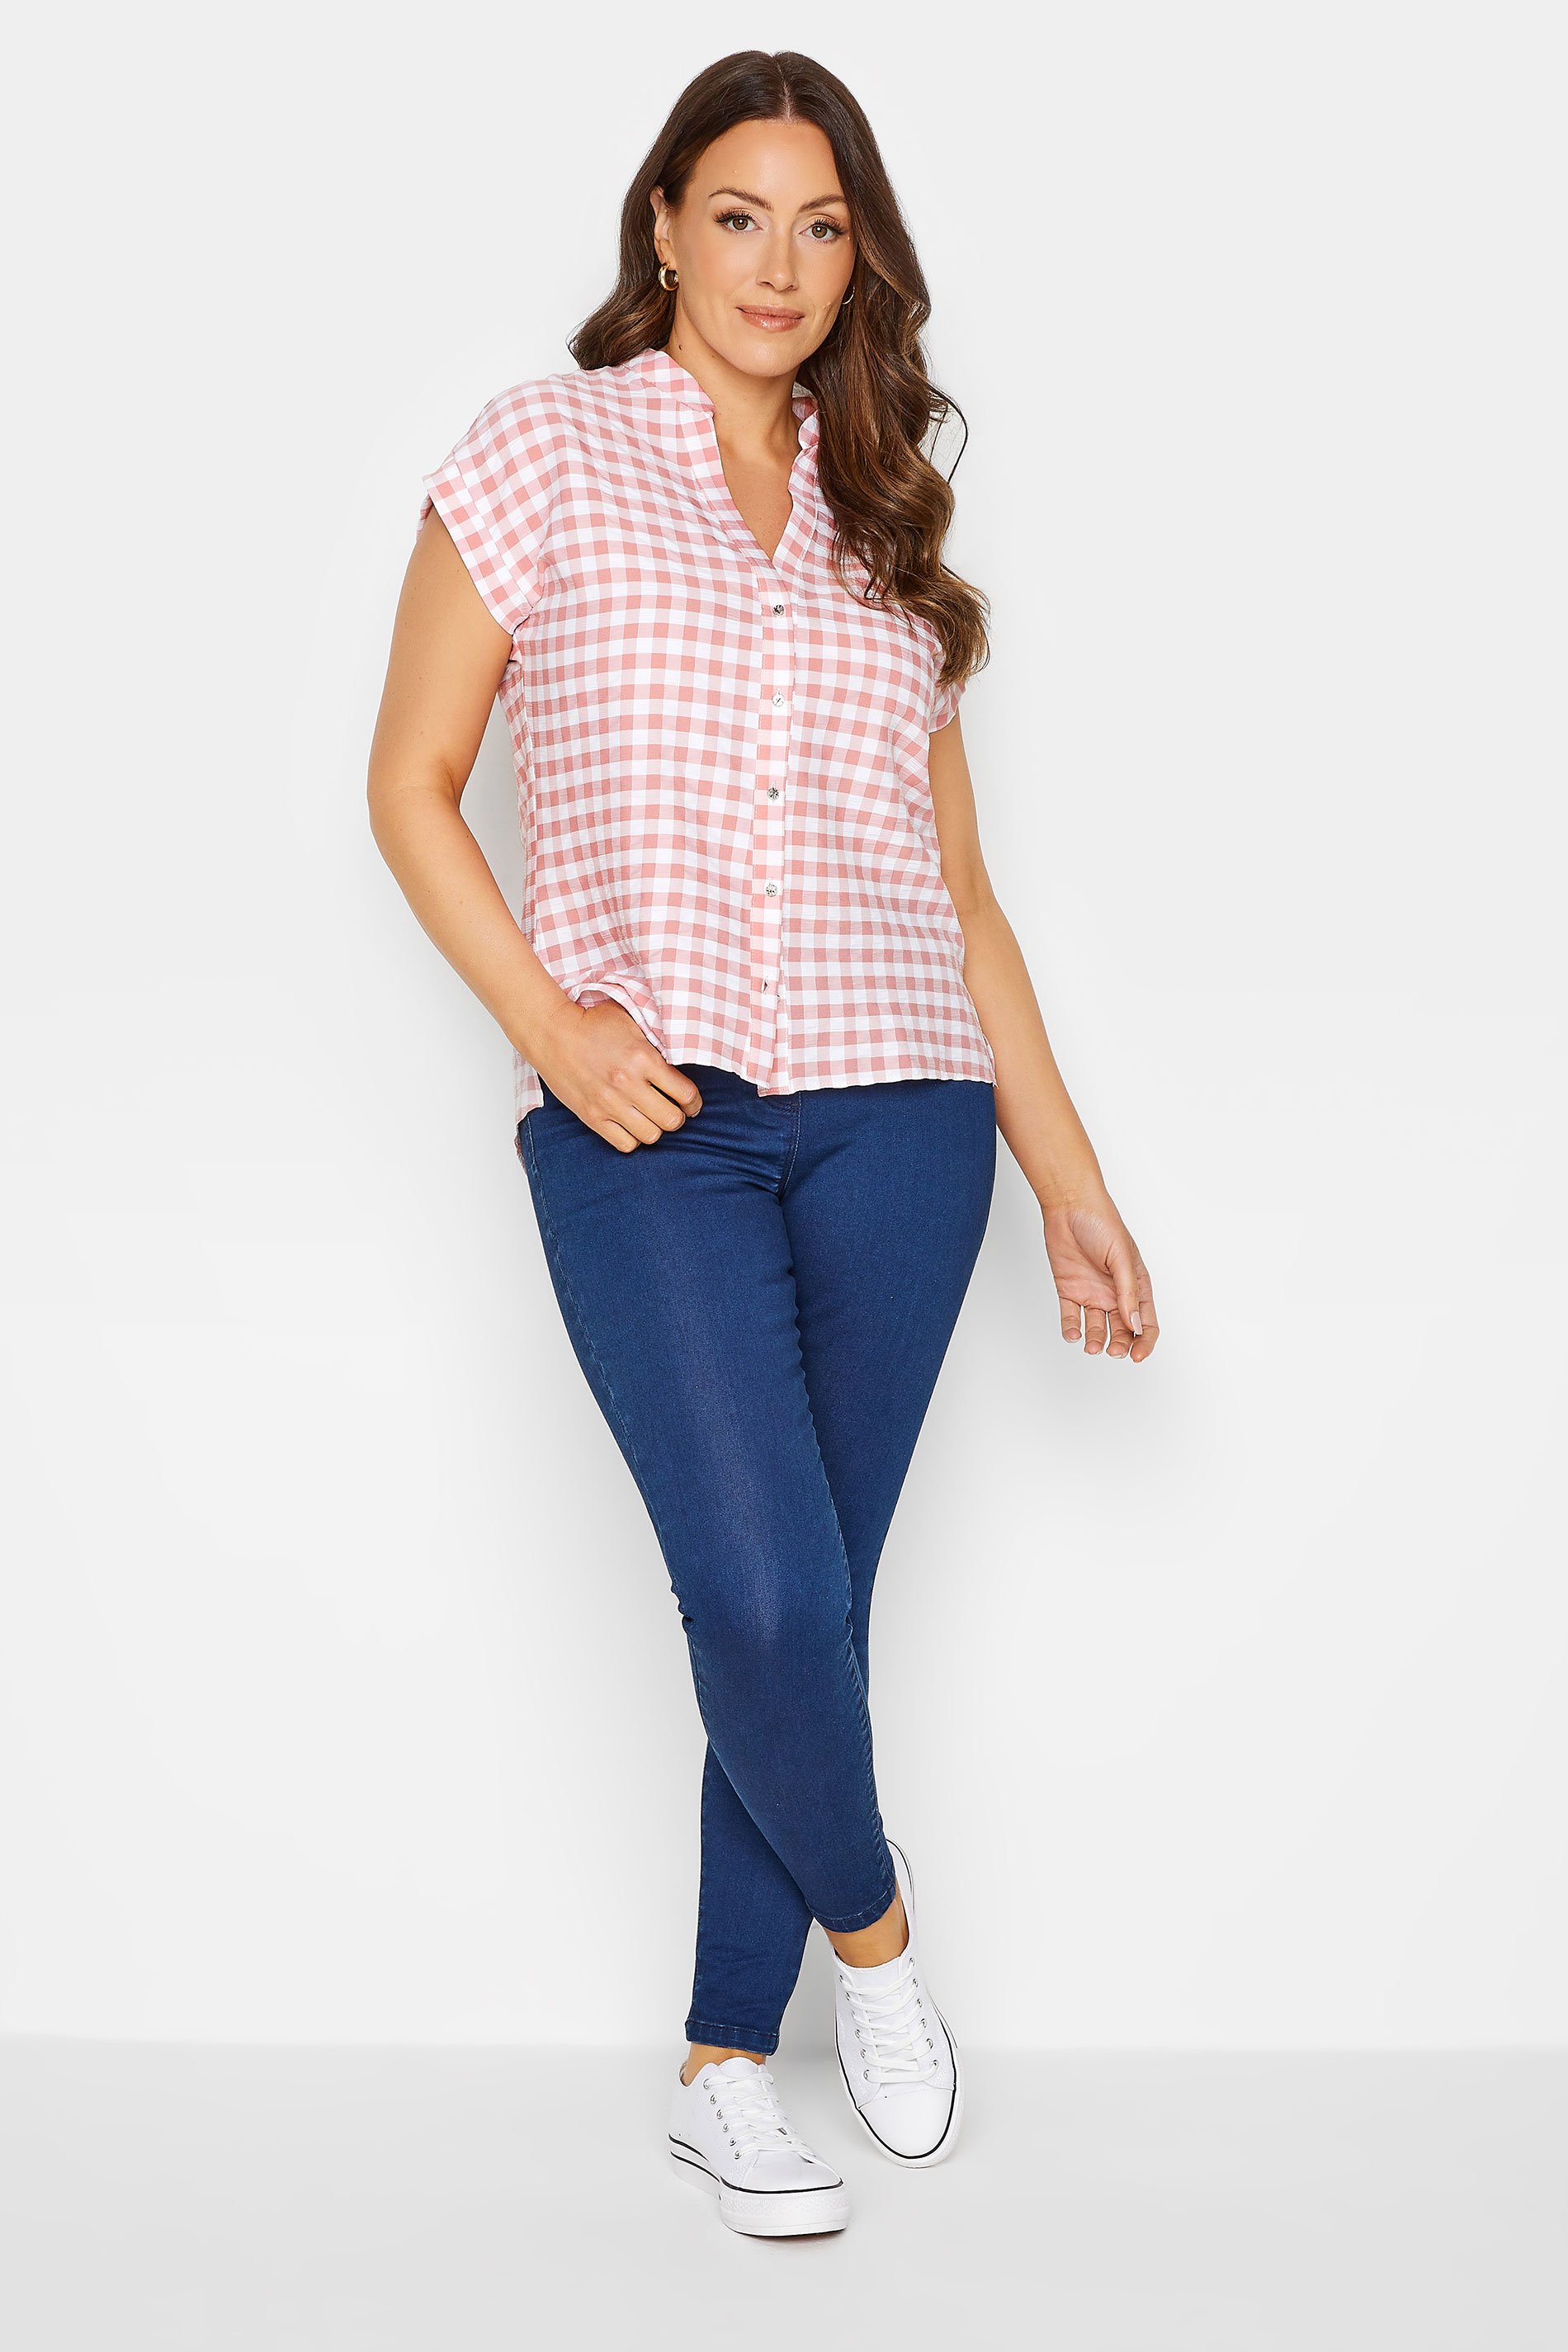 M&Co Pink Gingham Short Sleeve Shirt | M&Co 2